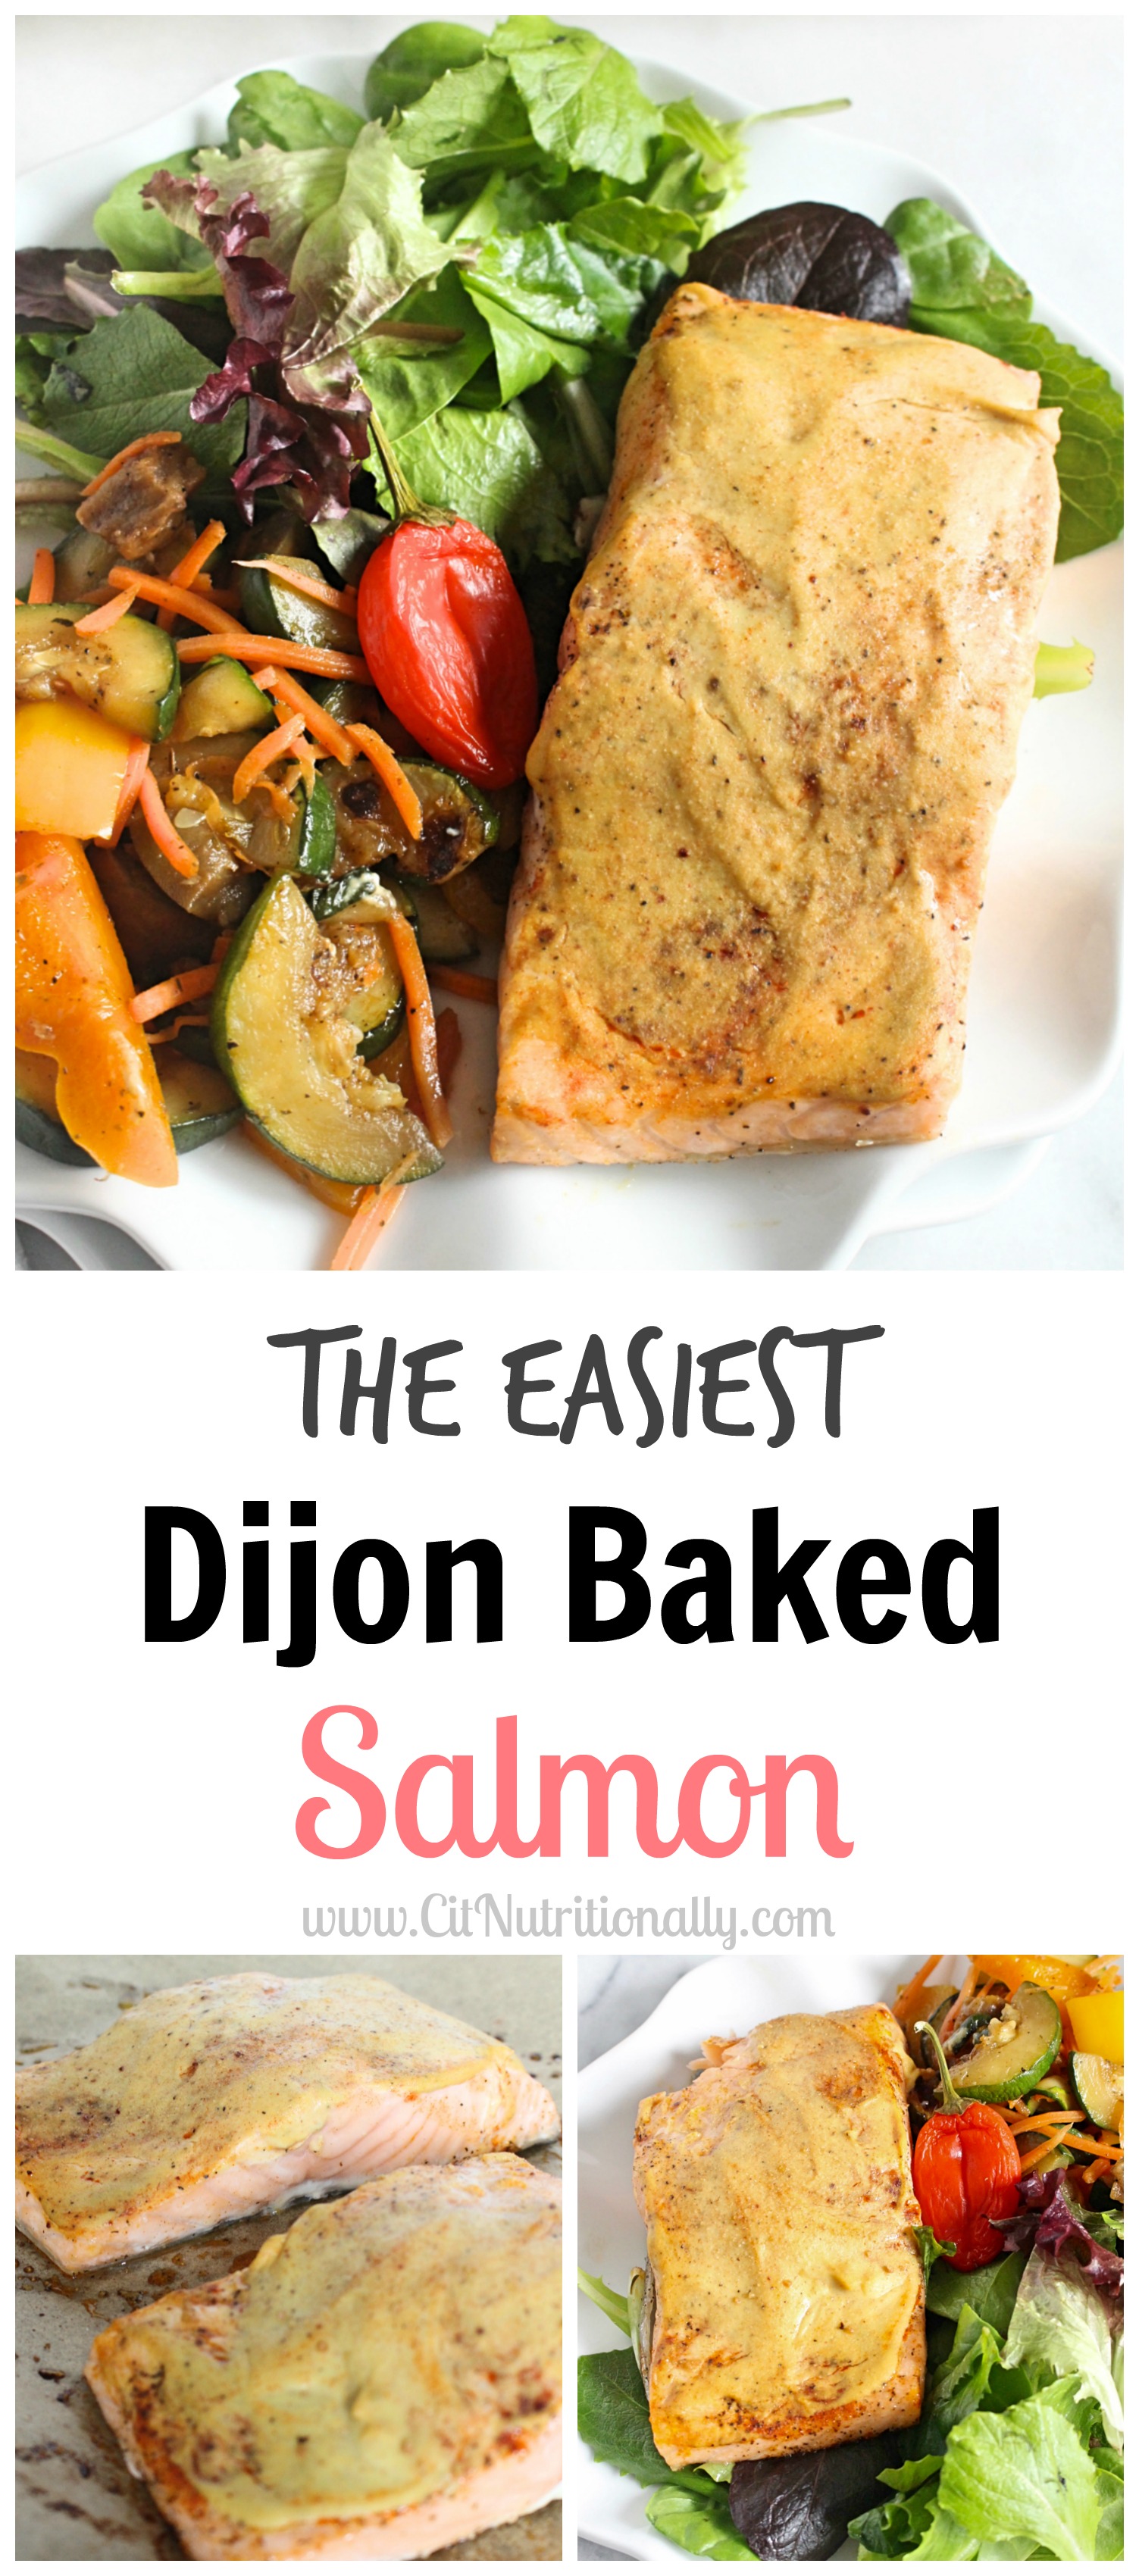 Easy Dijon Baked Salmon + Video! - C it Nutritionally